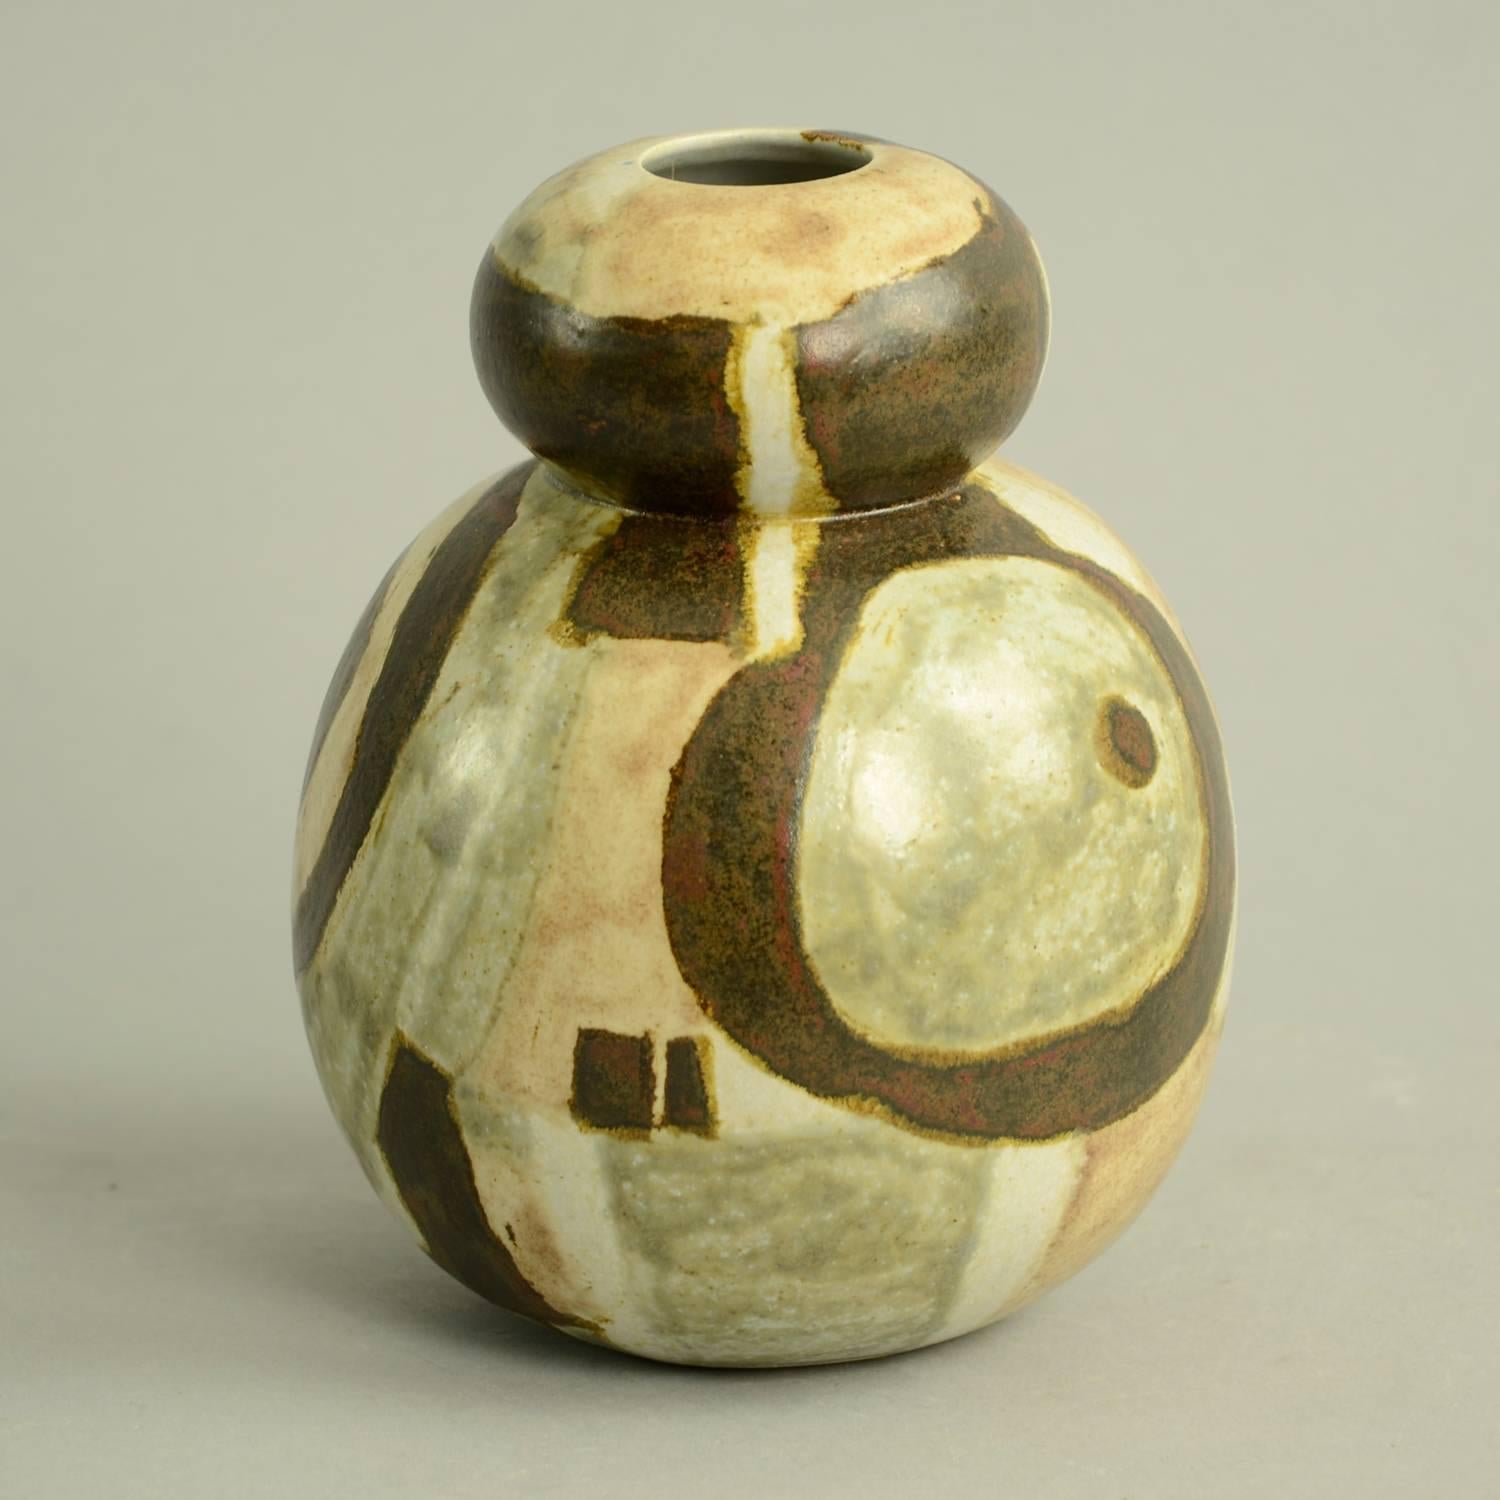 Annegret Knippel-Taschner, own studio, Germany

Unique stoneware vase with matte reddish brown glaze.
Measures: Height 5